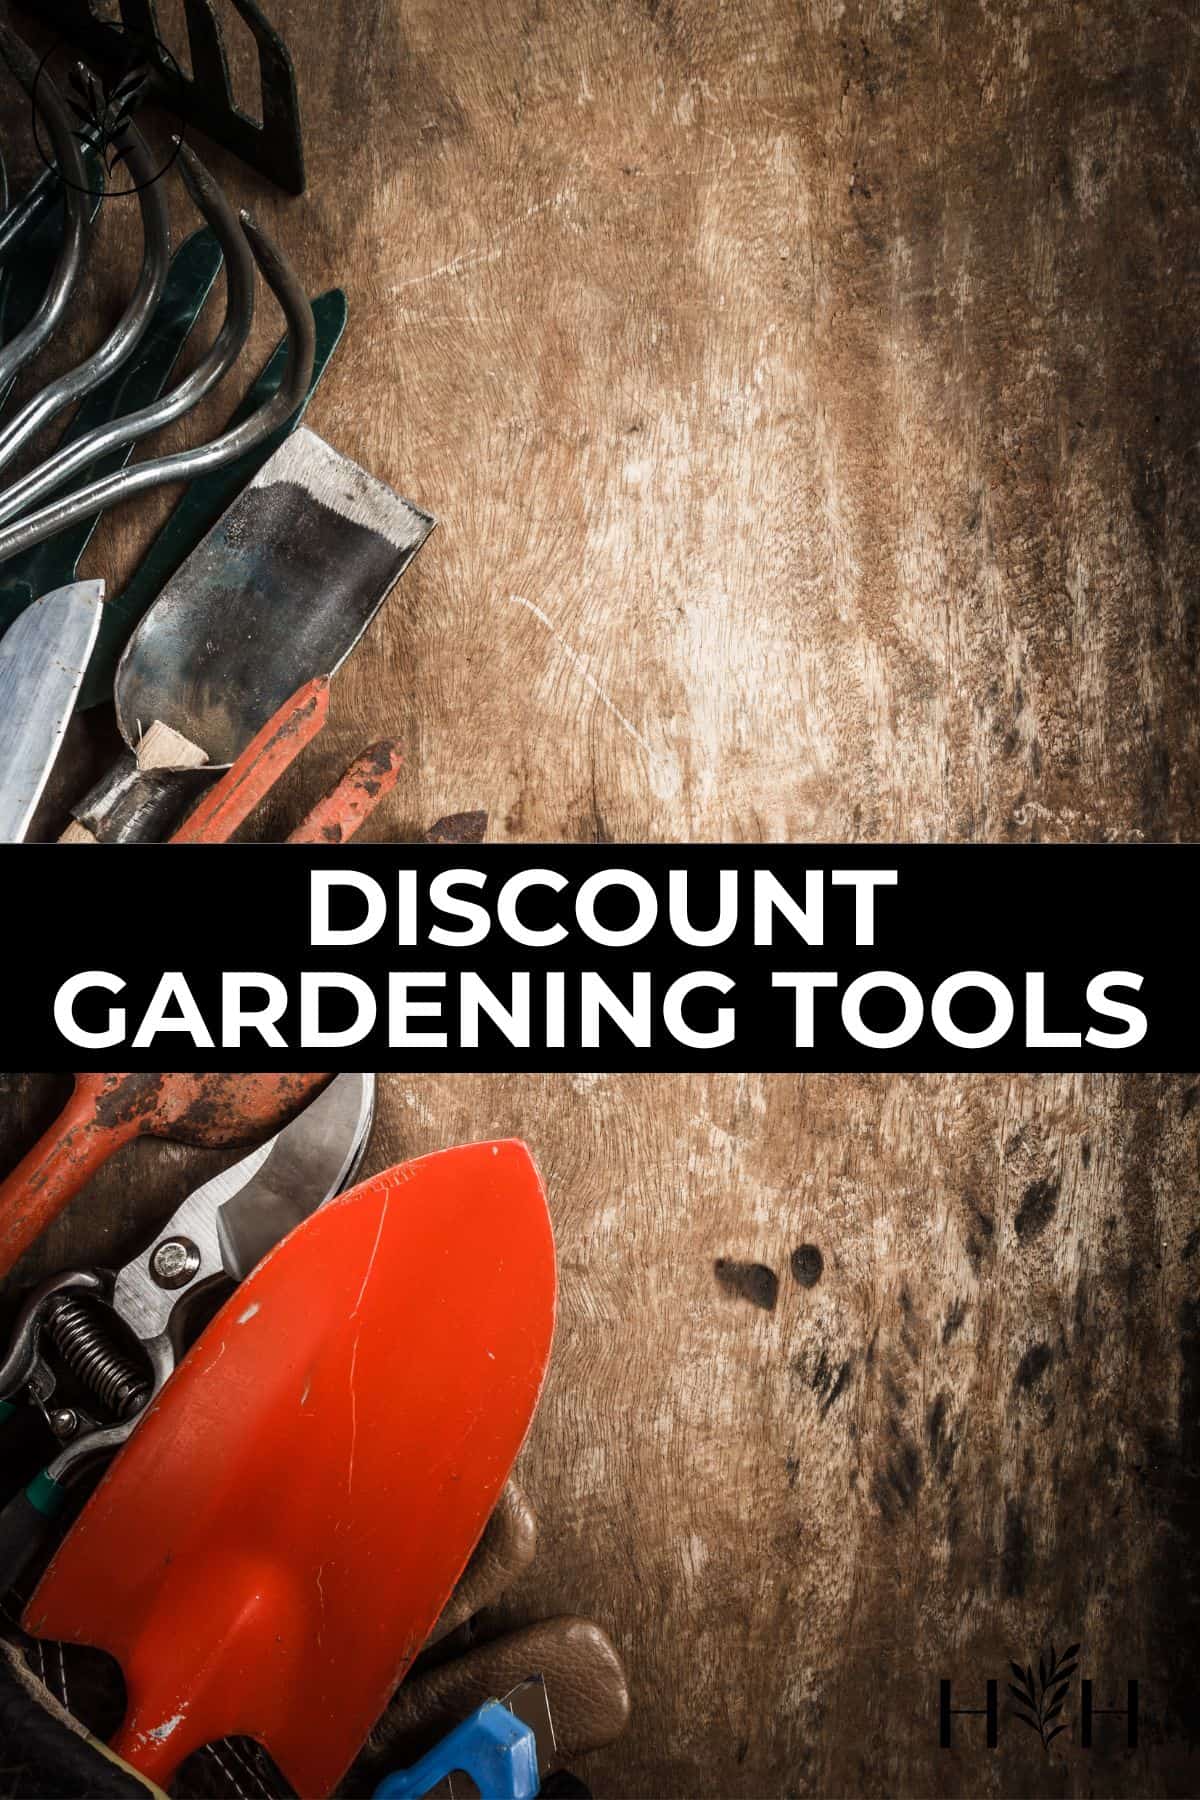 Discount gardening tools via @home4theharvest